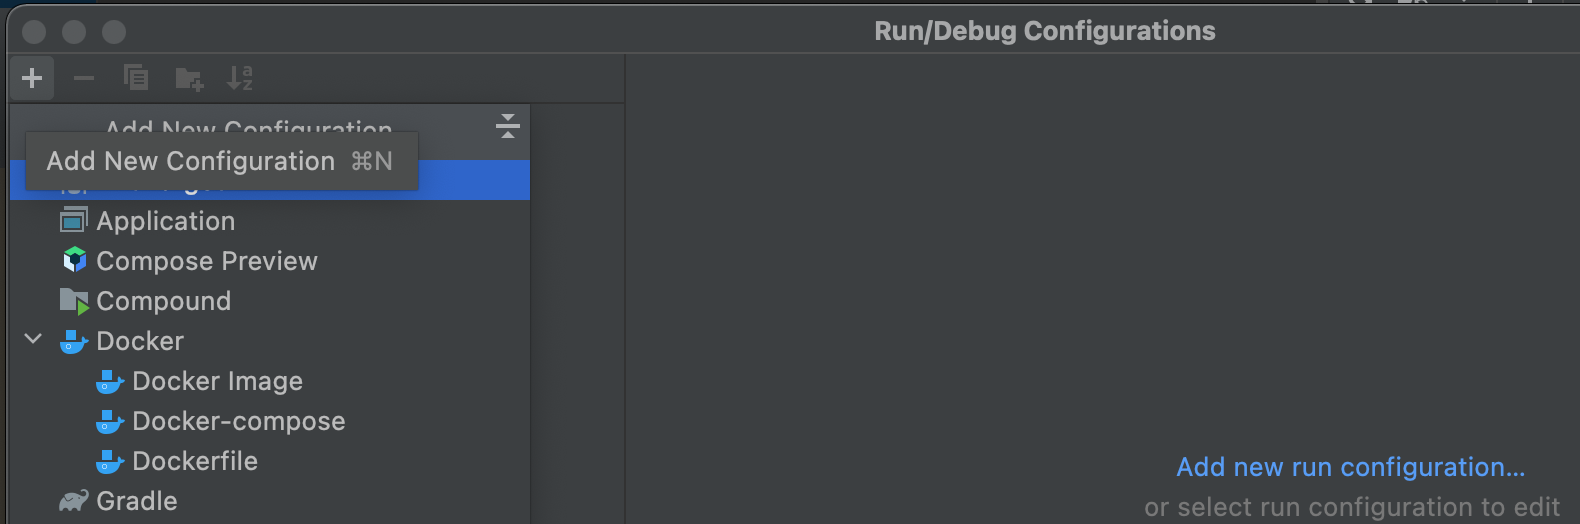 Adding a run configuration